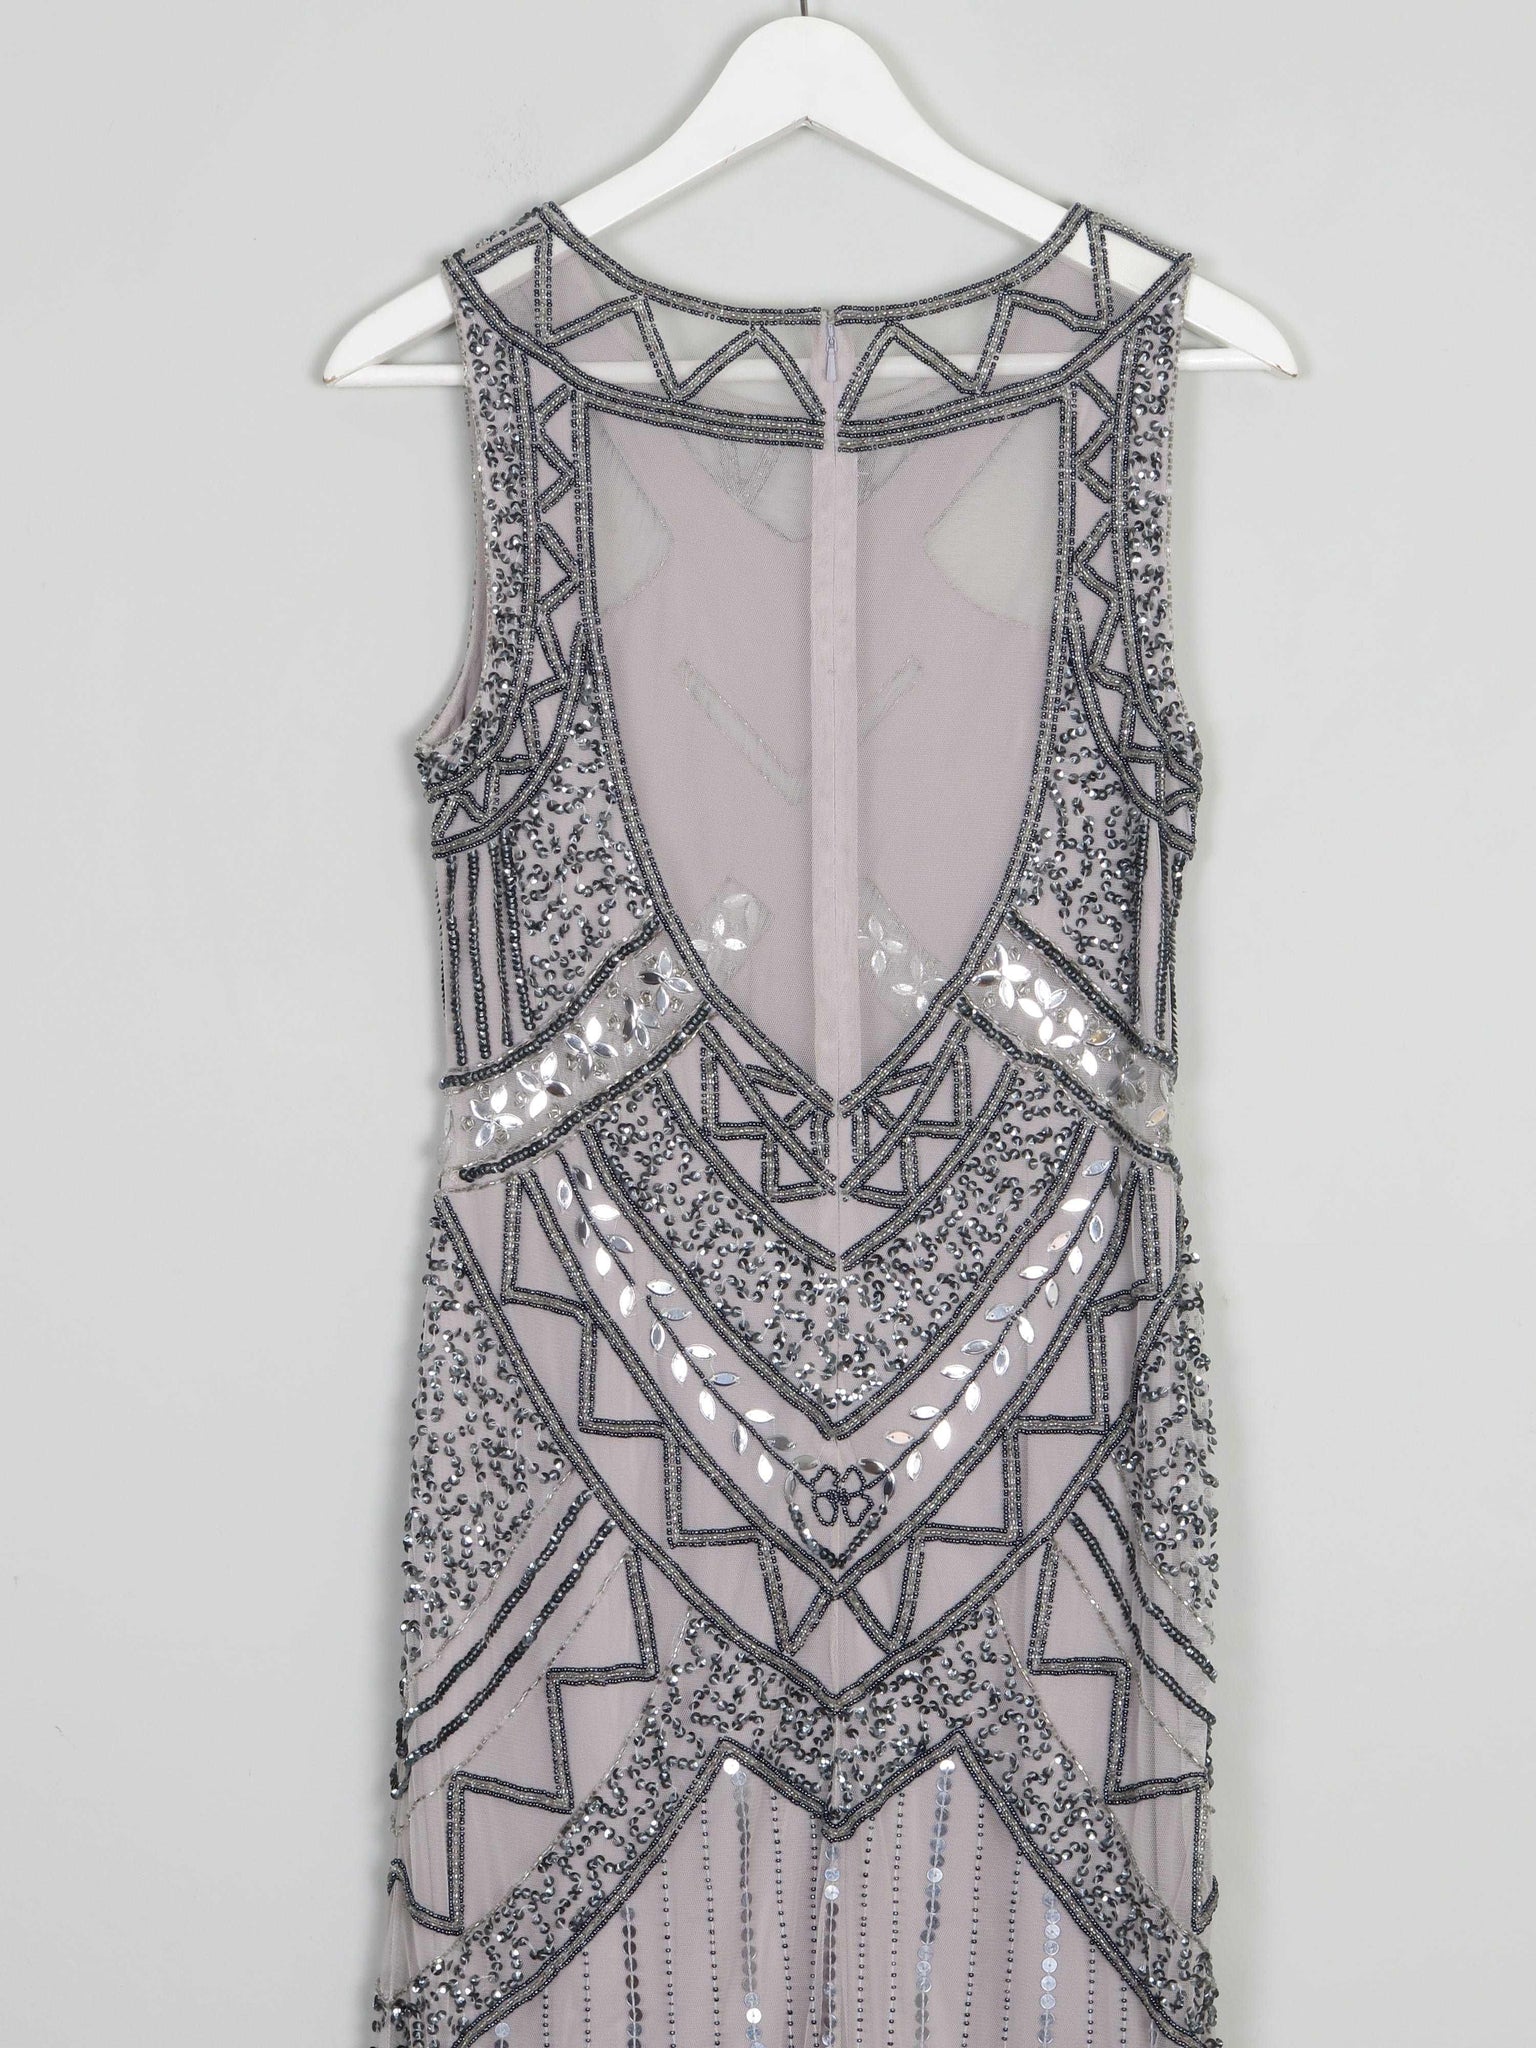 1920s Silver Style Full Length Beaded Evening Dress 10 - The Harlequin